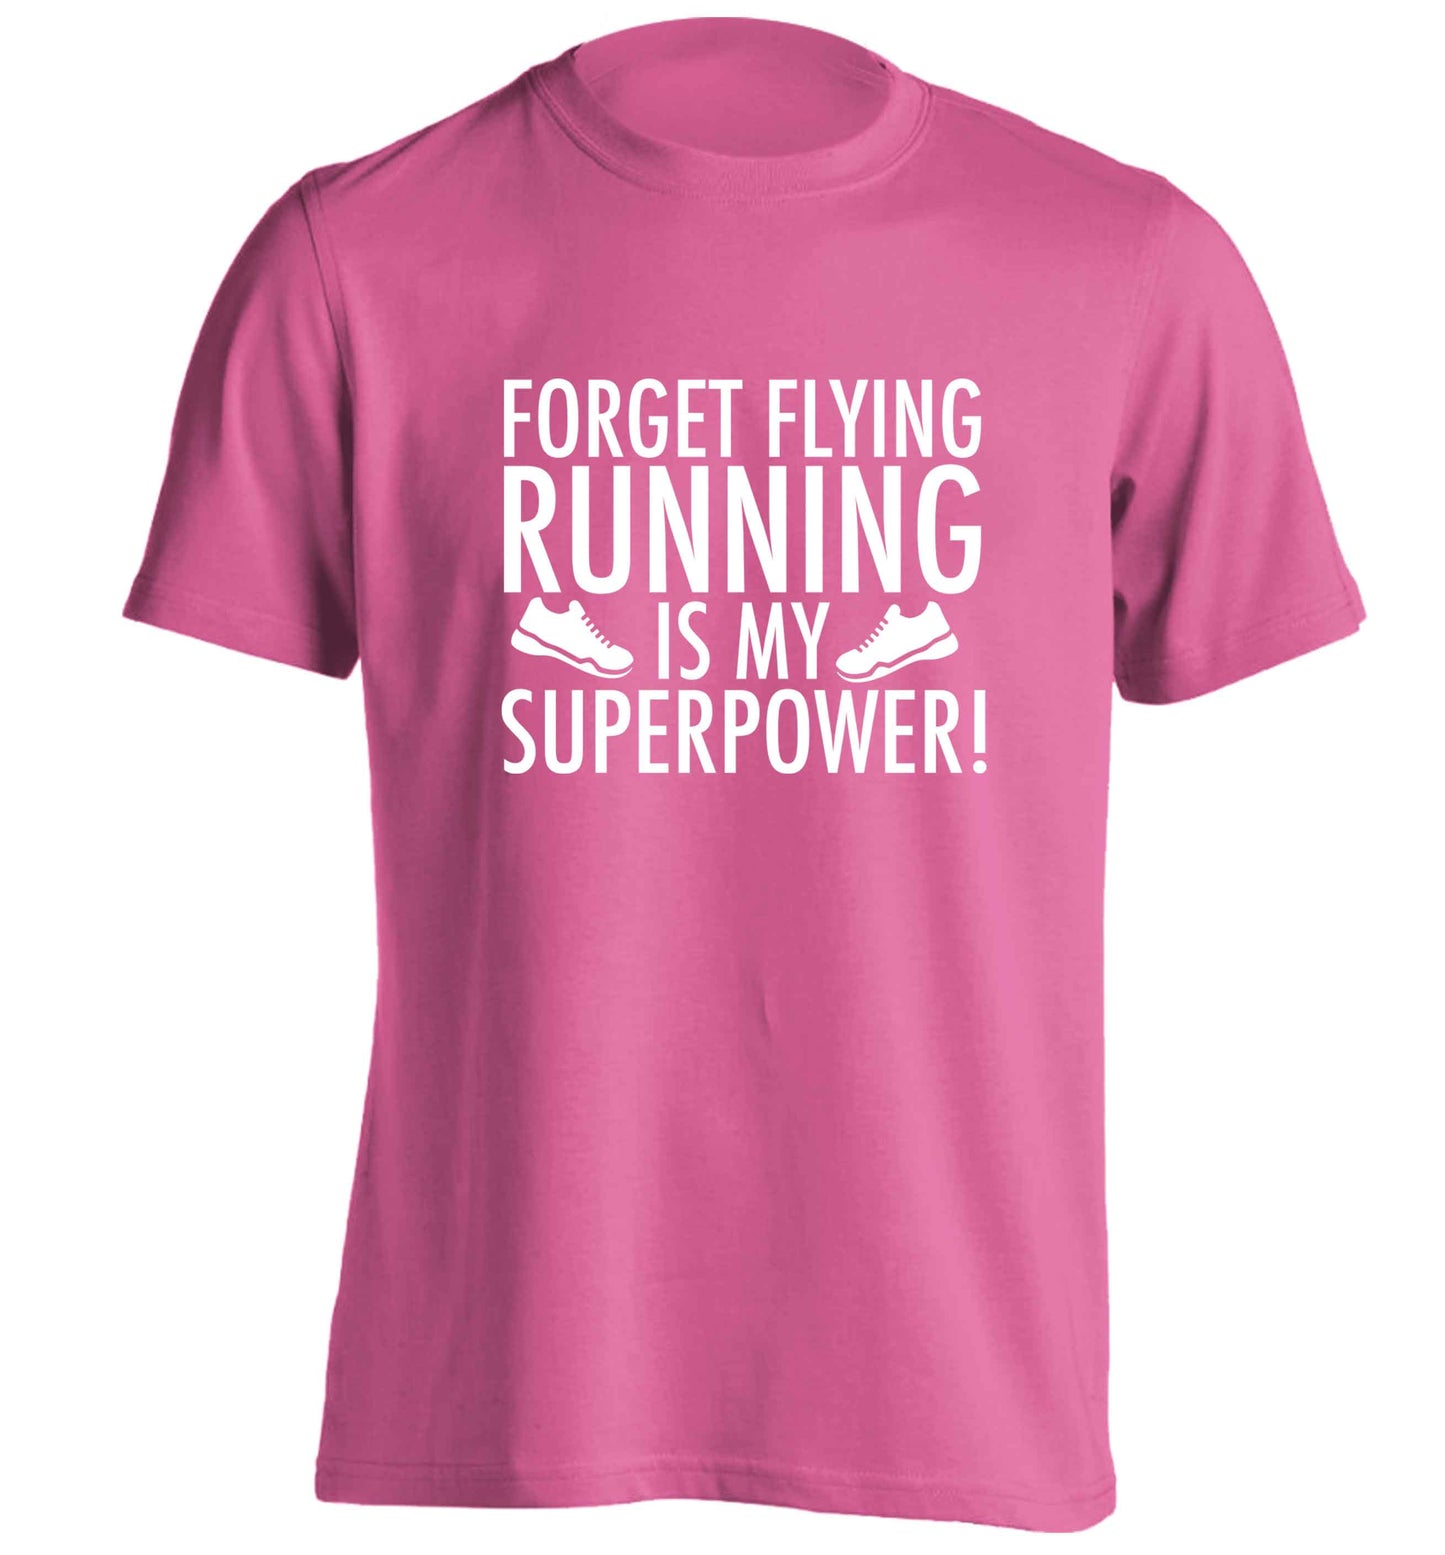 Crazy running dude adults unisex pink Tshirt 2XL